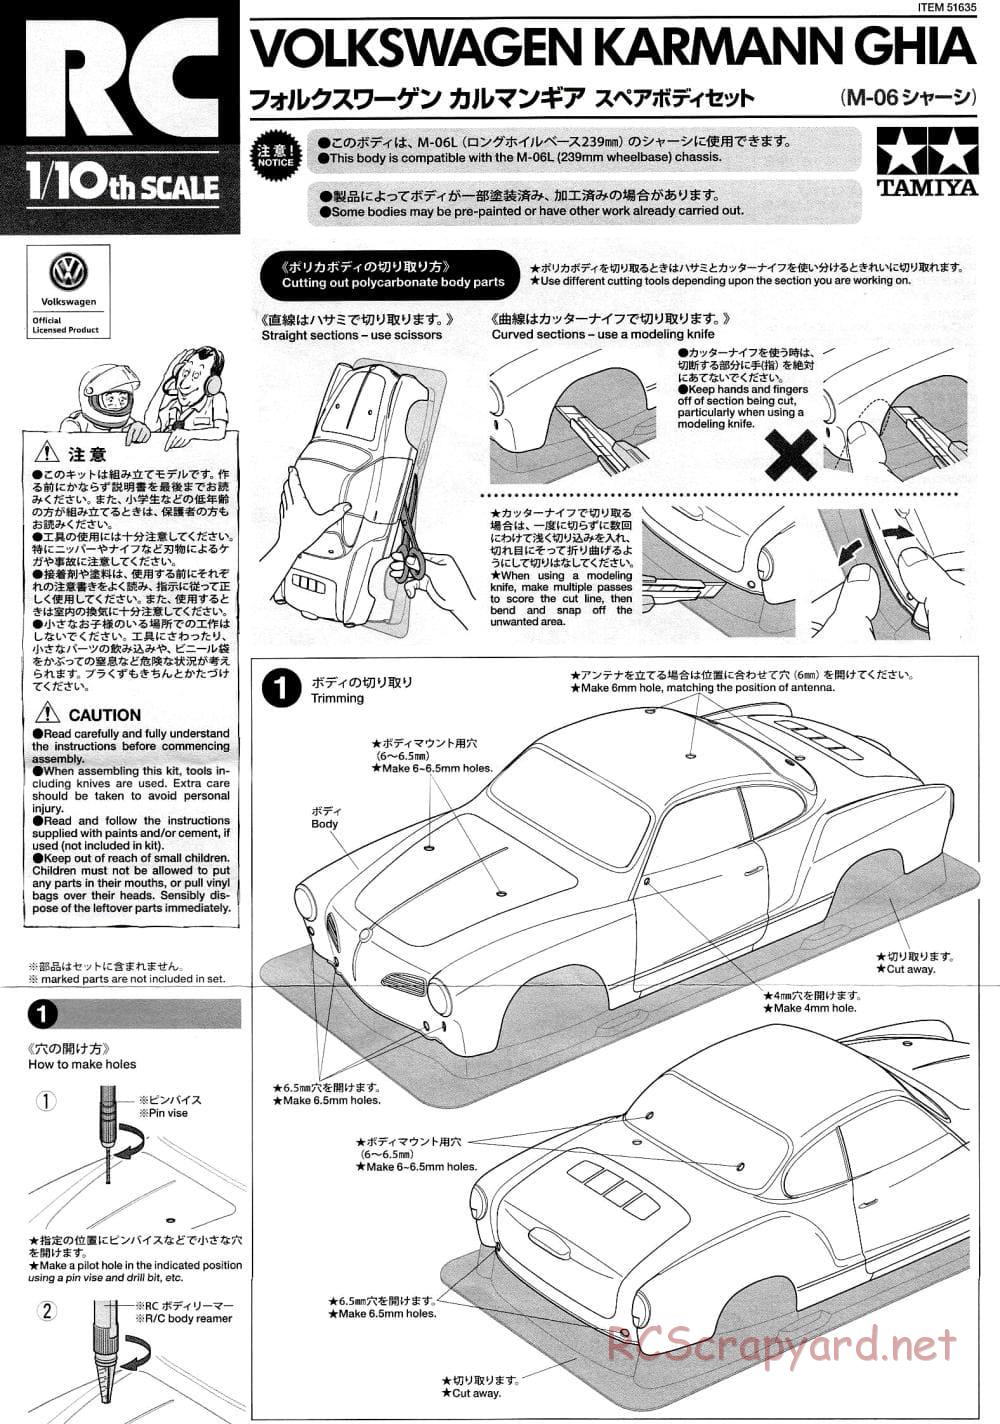 Tamiya - Volkswagen Karmann Ghia - M-06 Chassis - Body Manual - Page 1